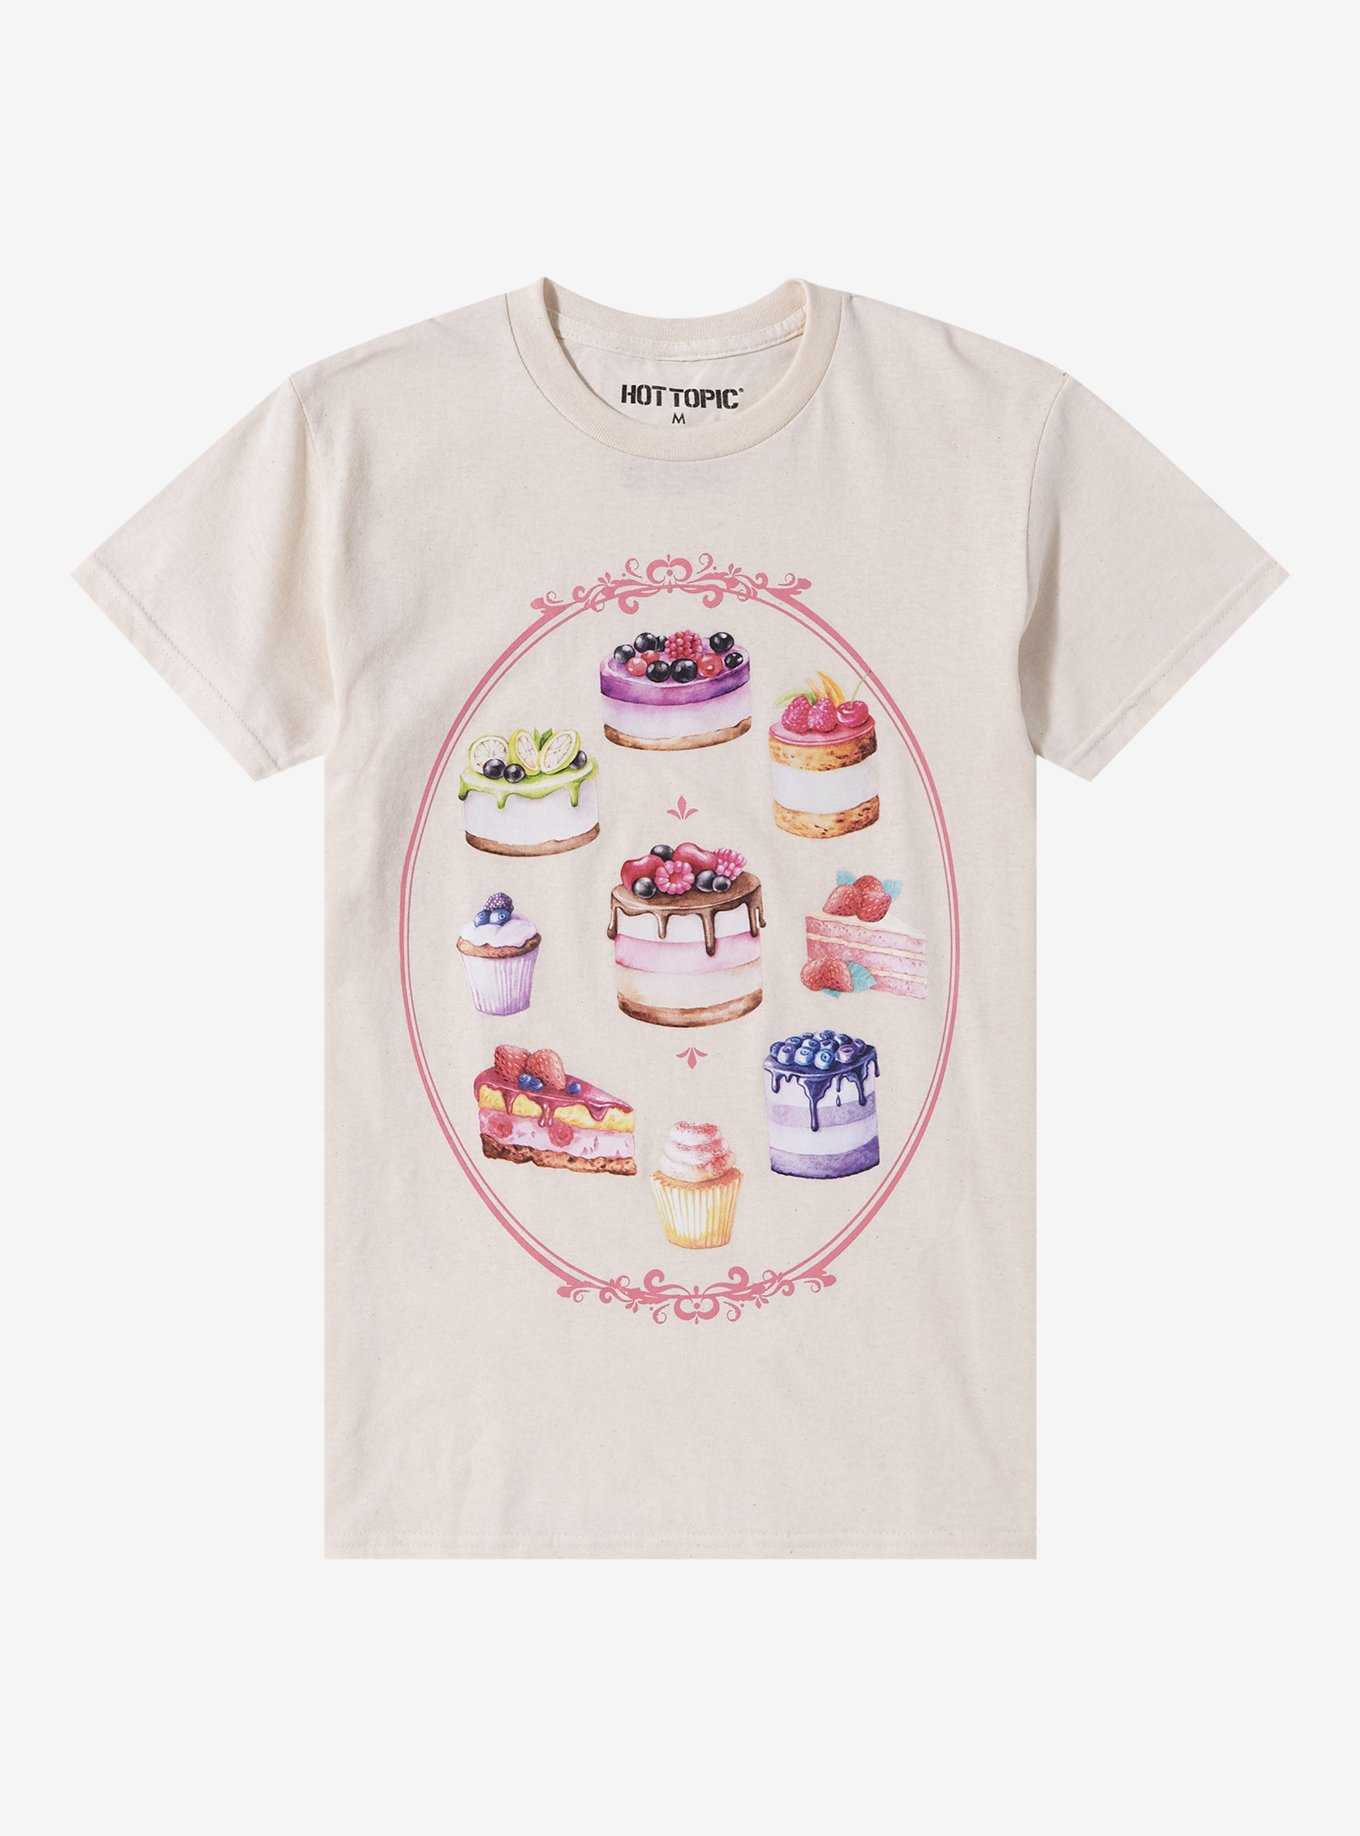 Cake Filigree Frame Boyfriend Fit Girls T-Shirt, , hi-res